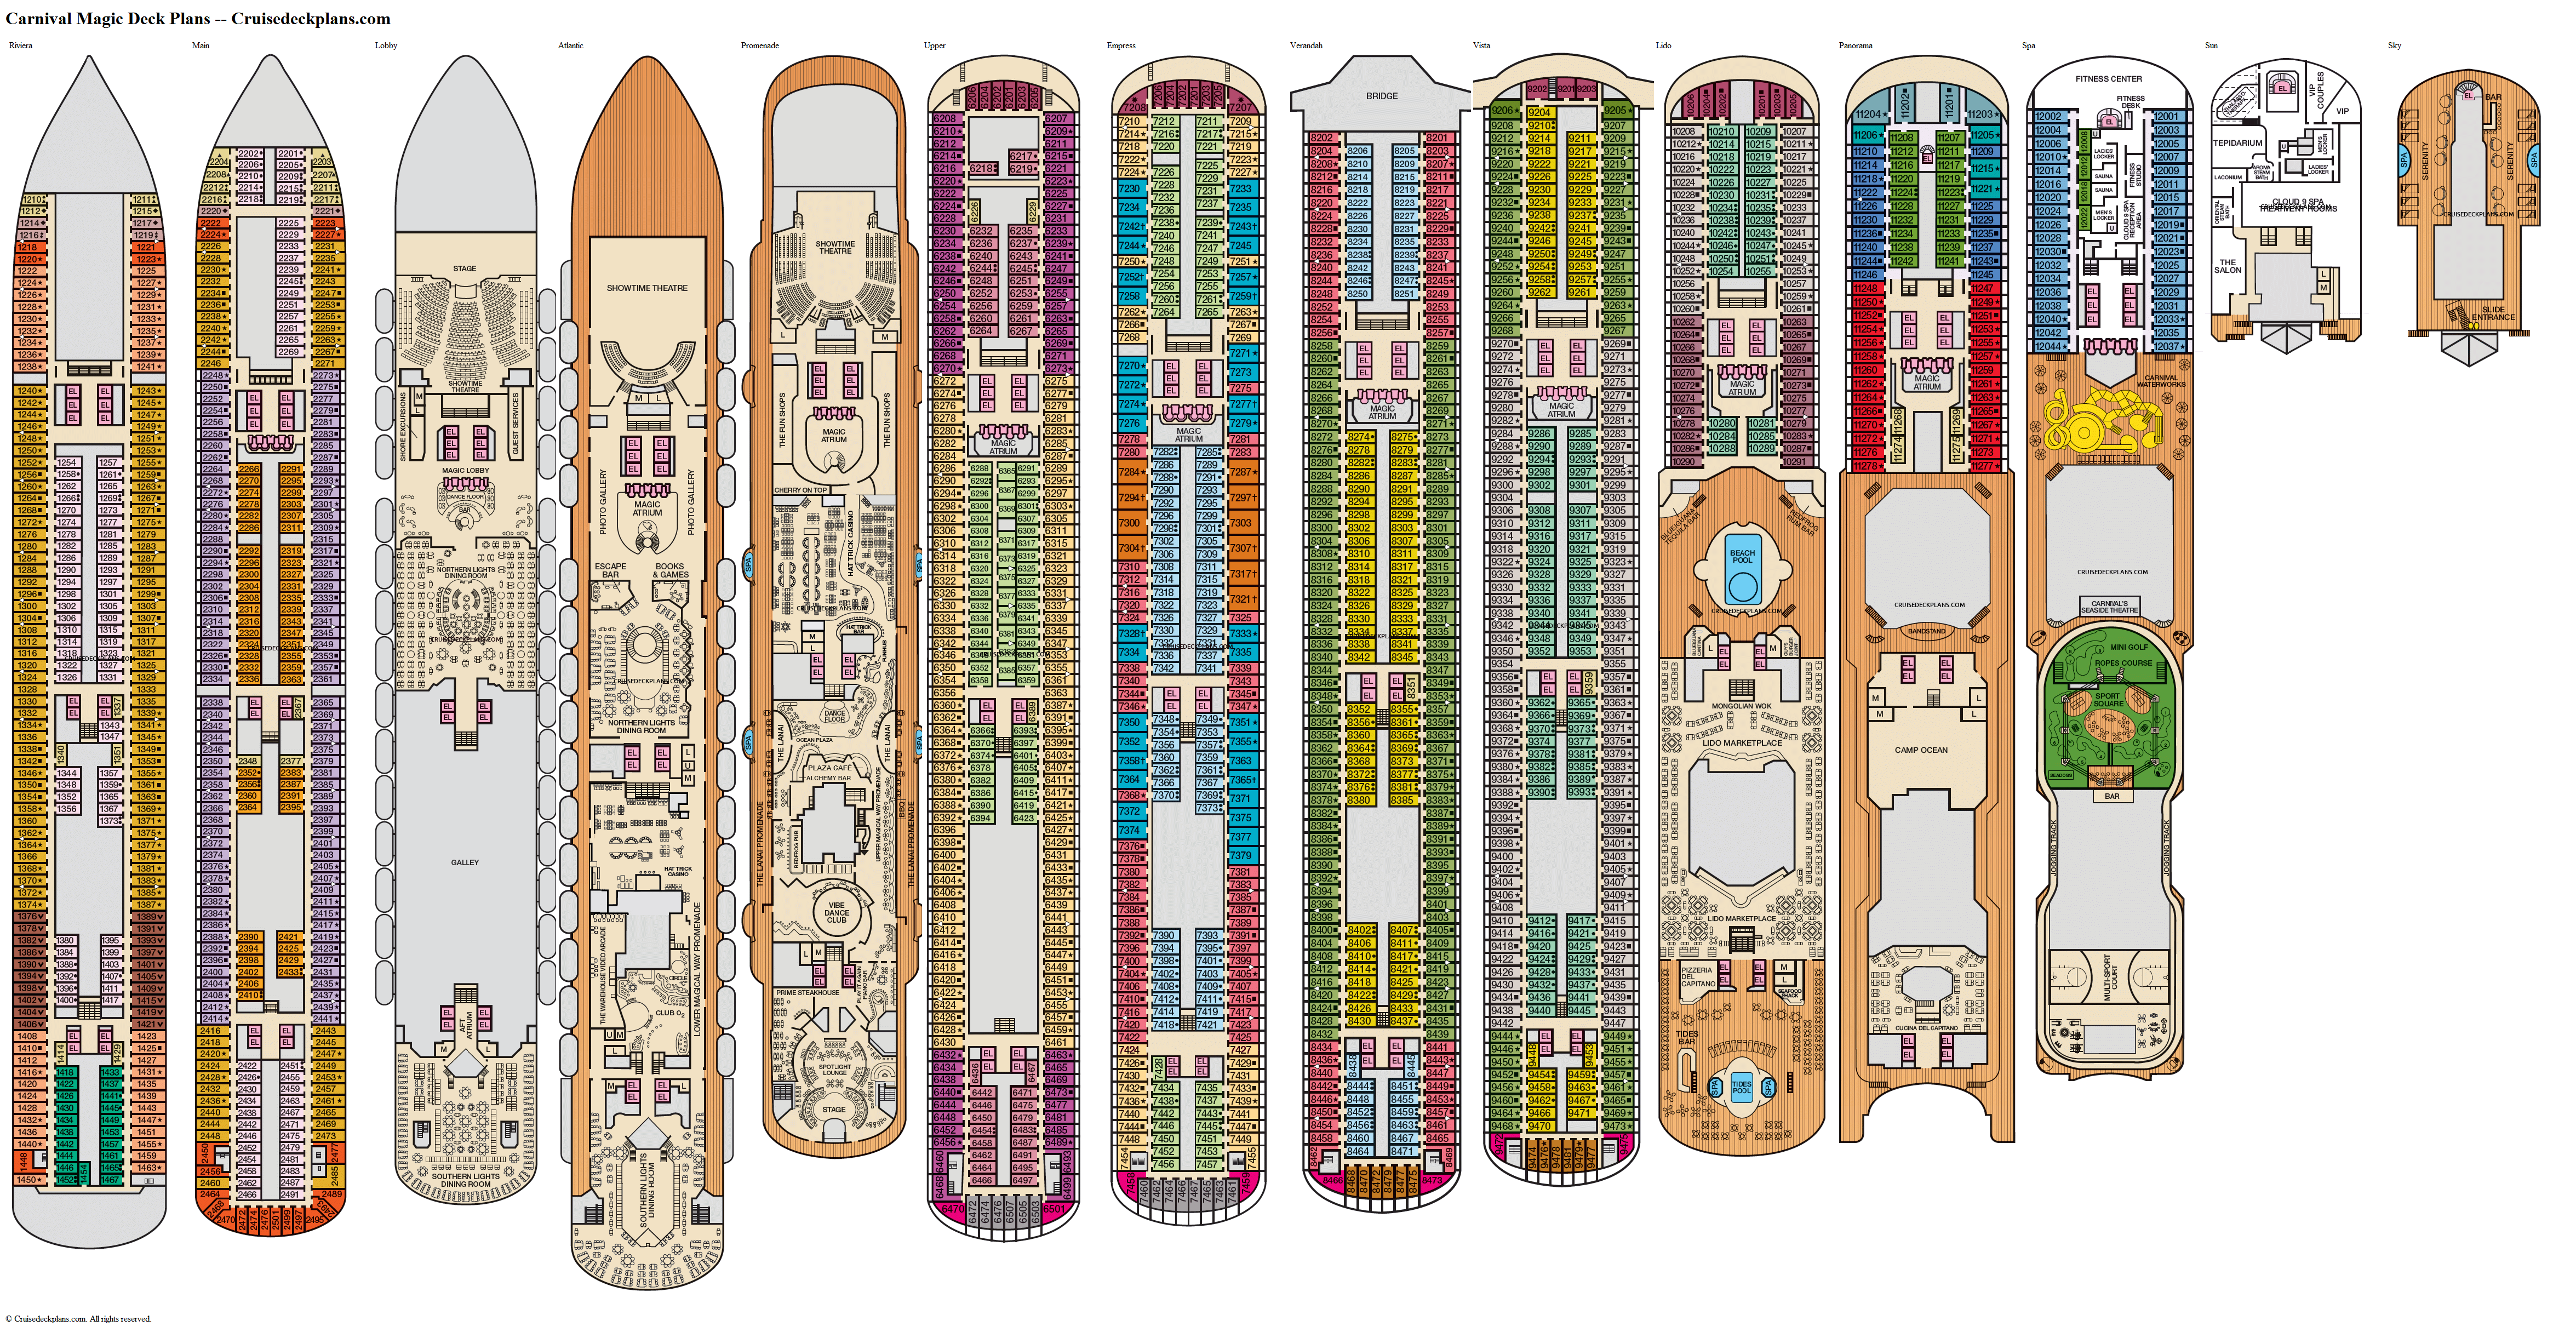 Carnival Cruise Ship Floor Plan floorplans.click